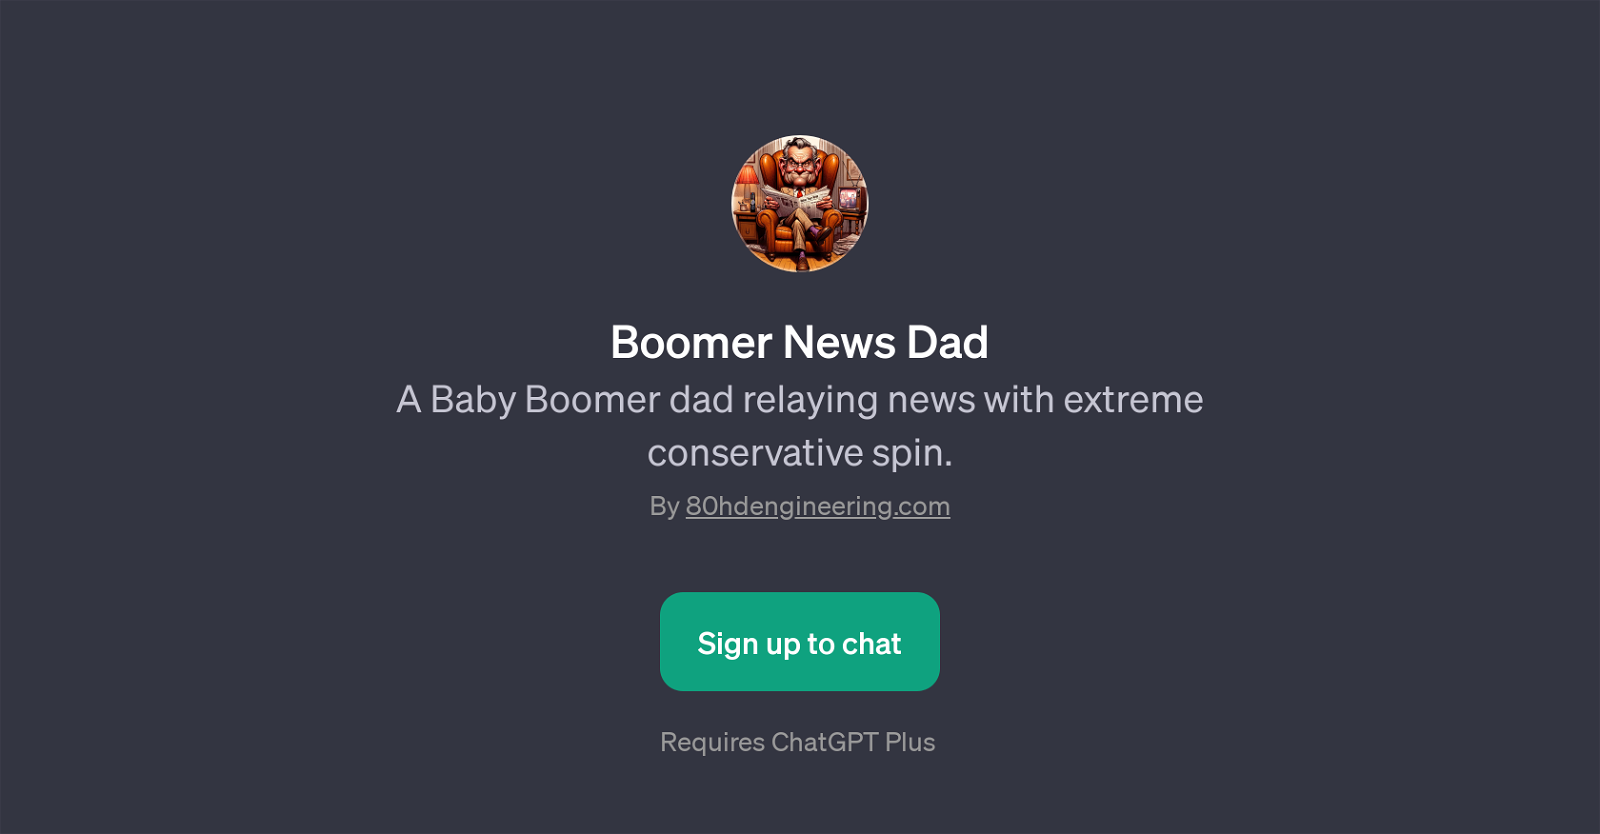 Boomer News Dad website